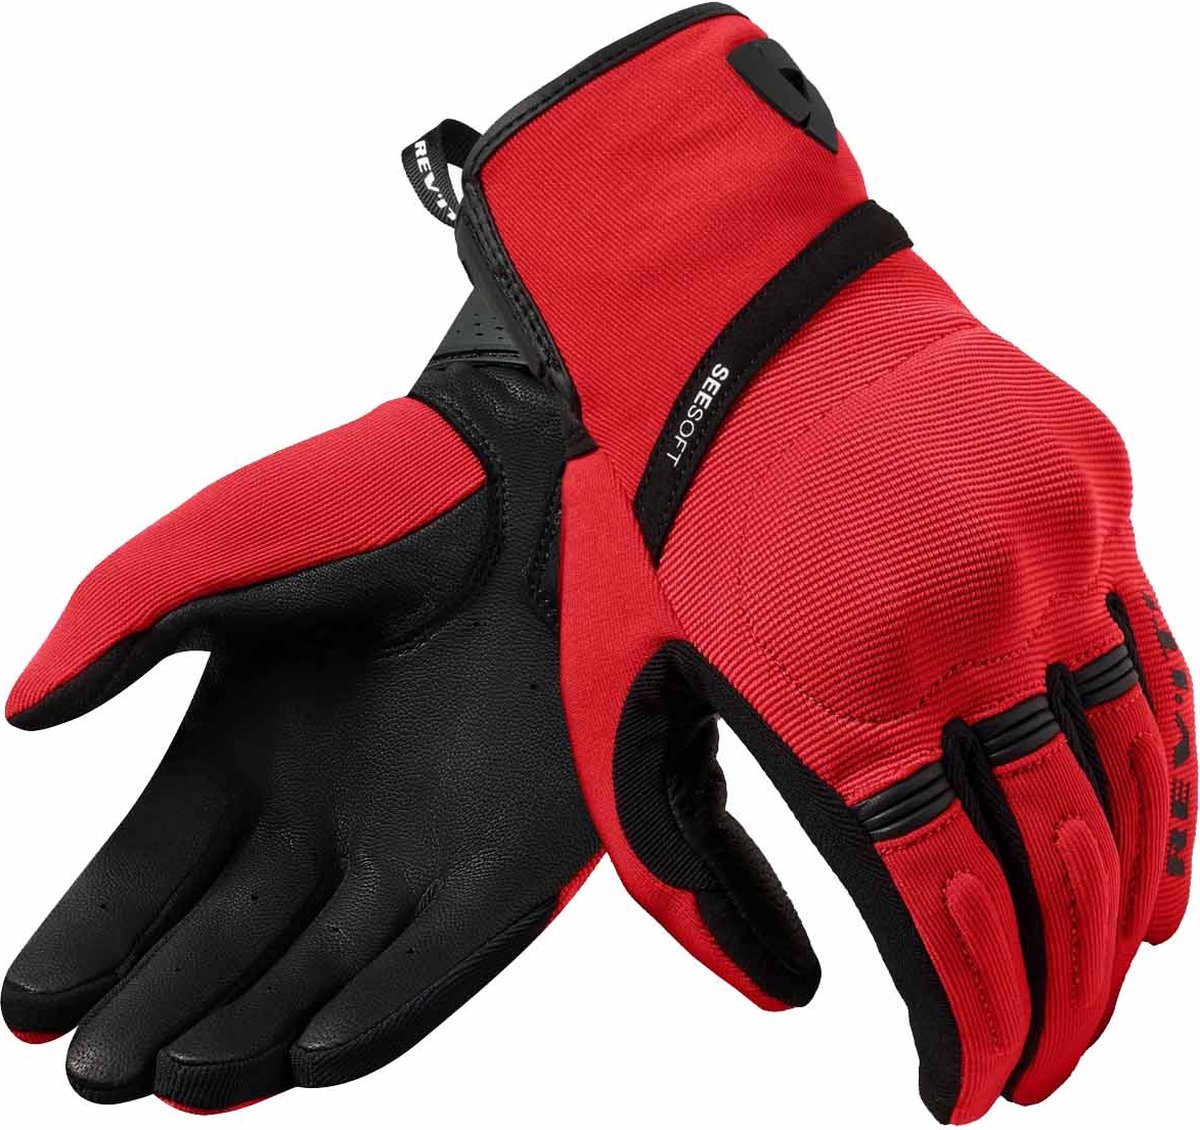 REV'IT! Gloves Mosca 2 Red Black 2XL - Maat 2XL - Handschoen